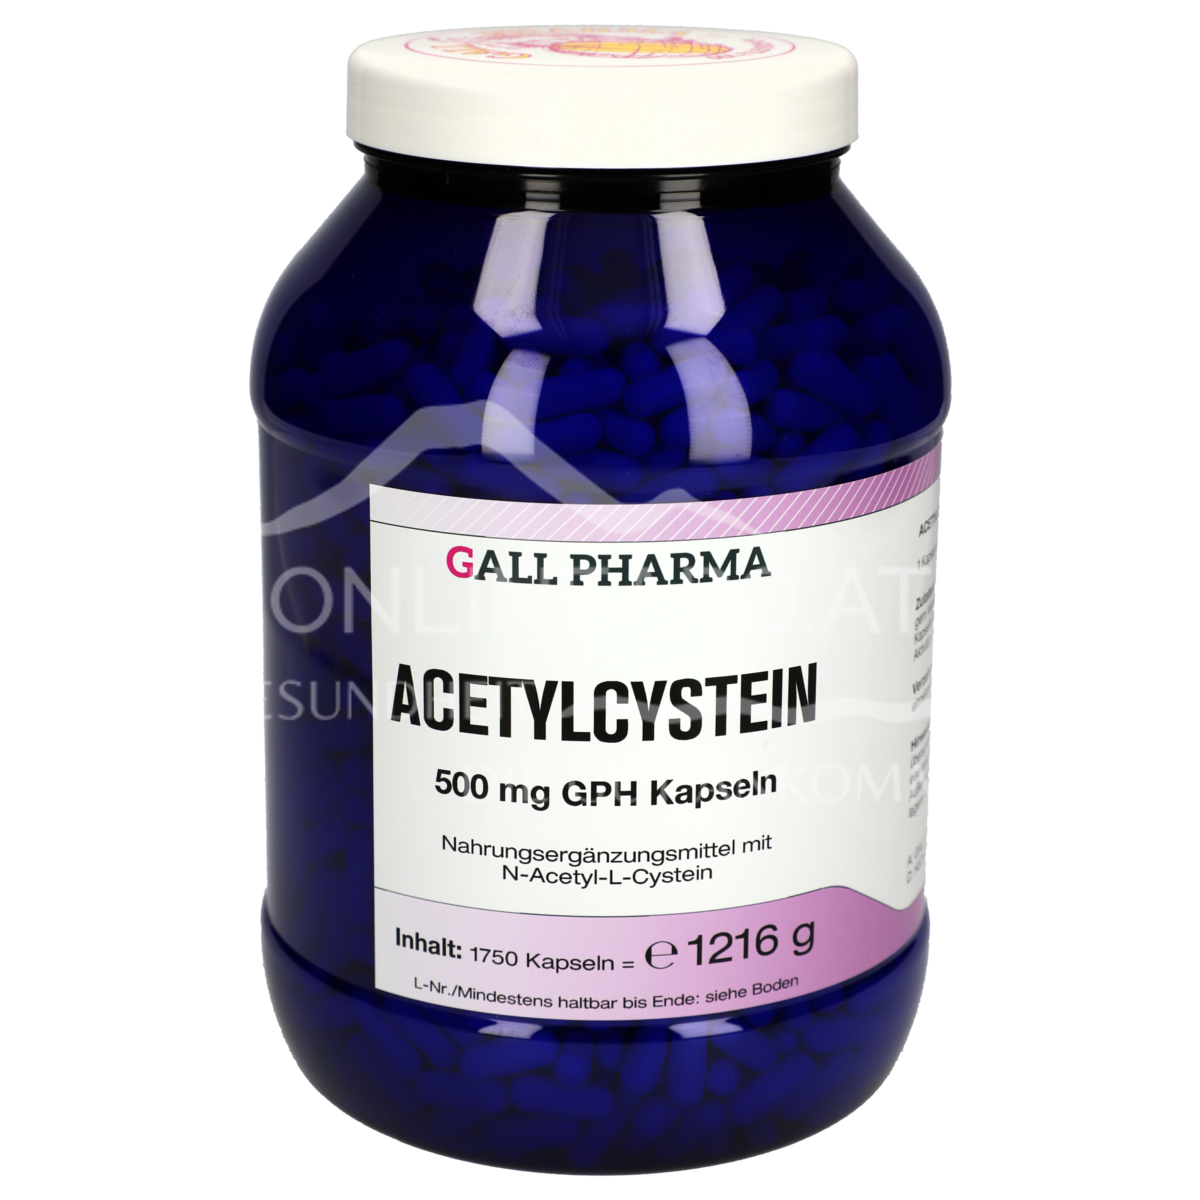 Gall Pharma Acetylcystein 500 mg Kapseln